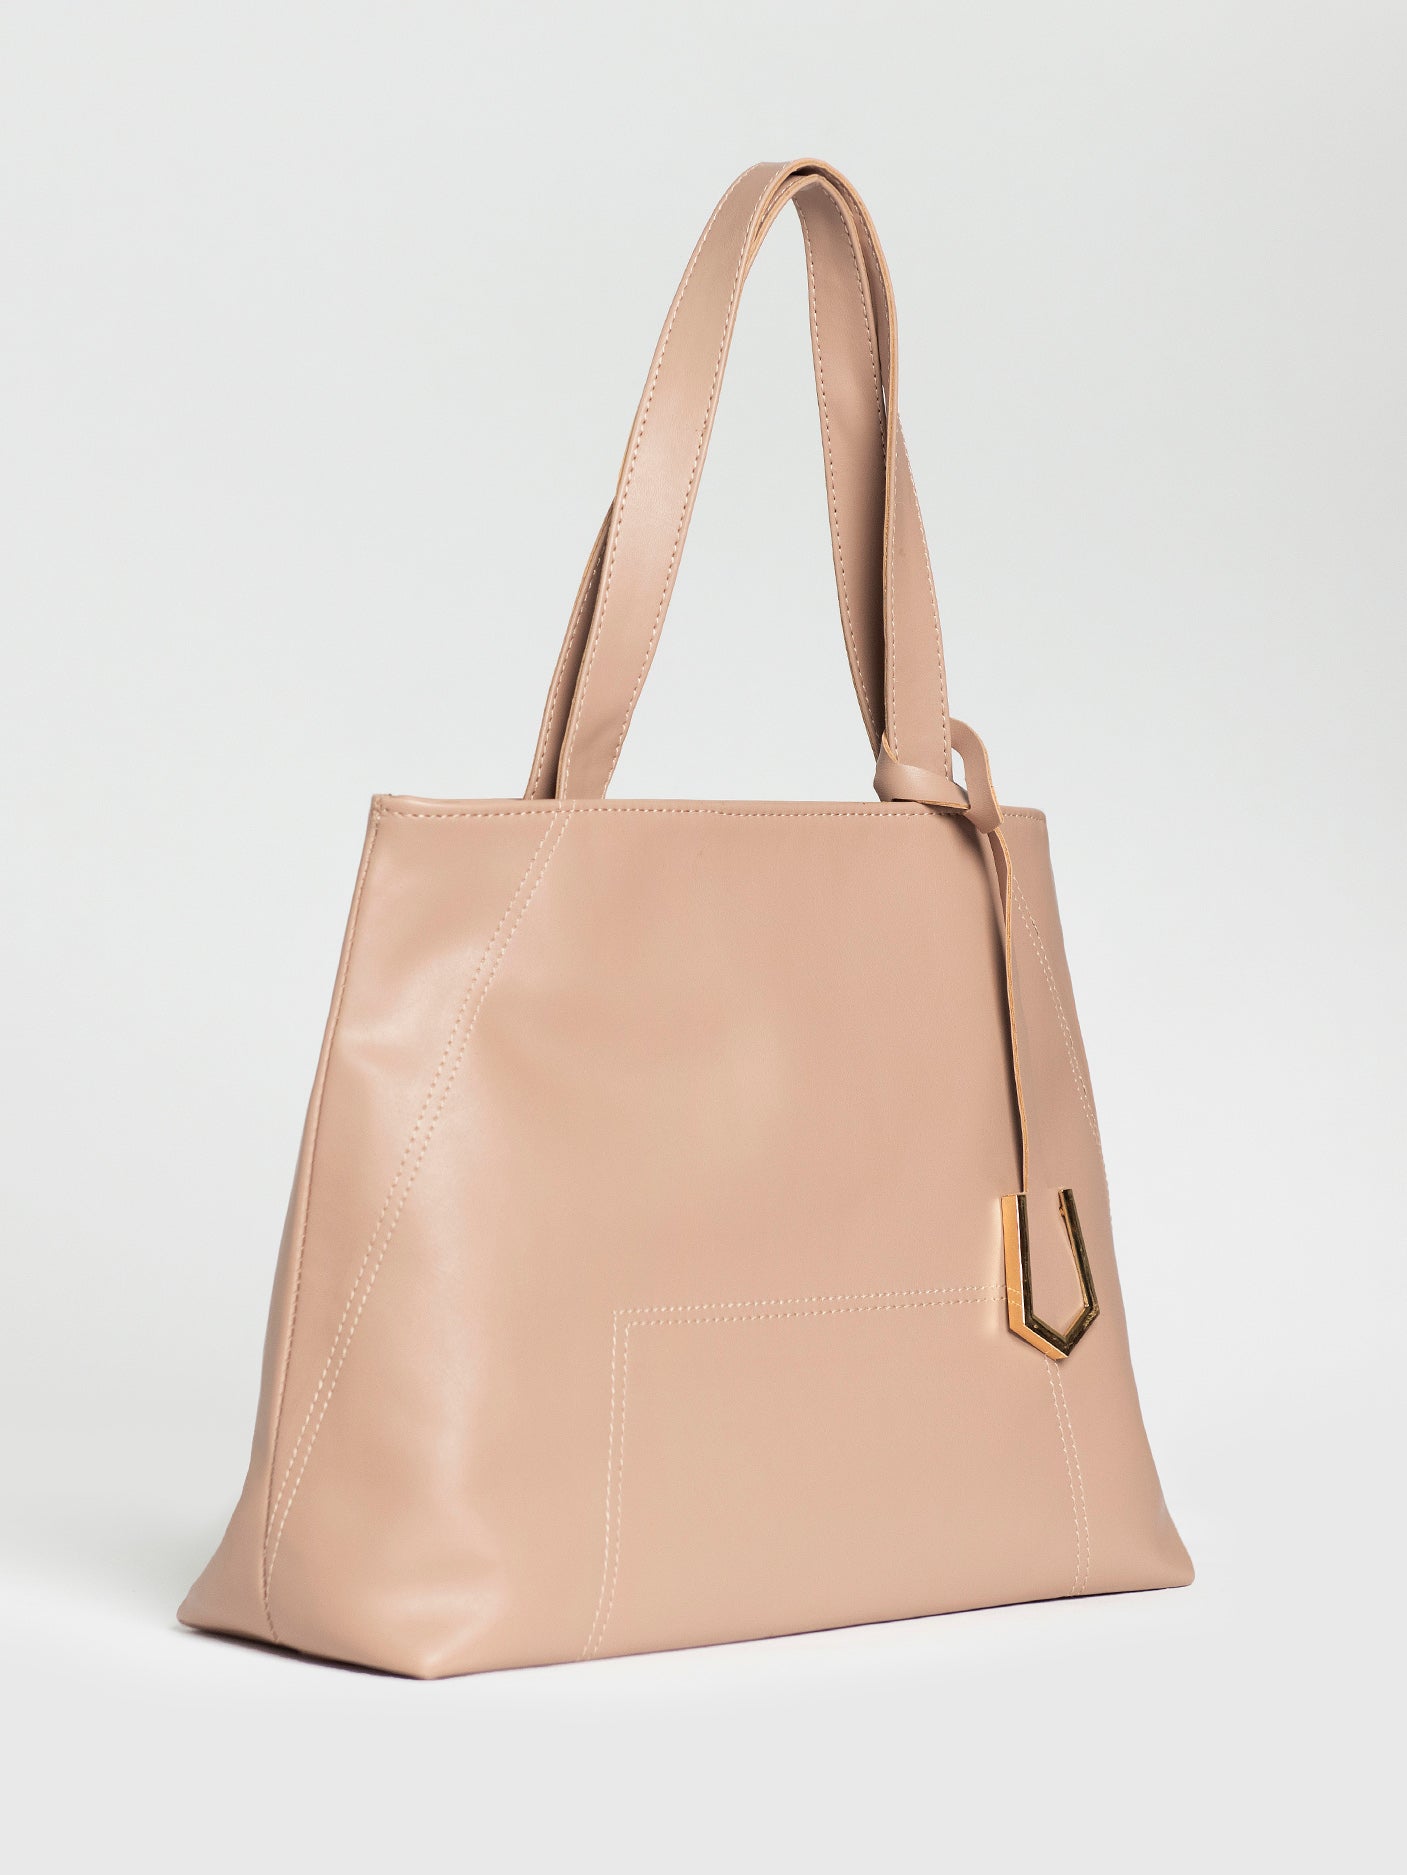 classic-metallic-tassel-bag